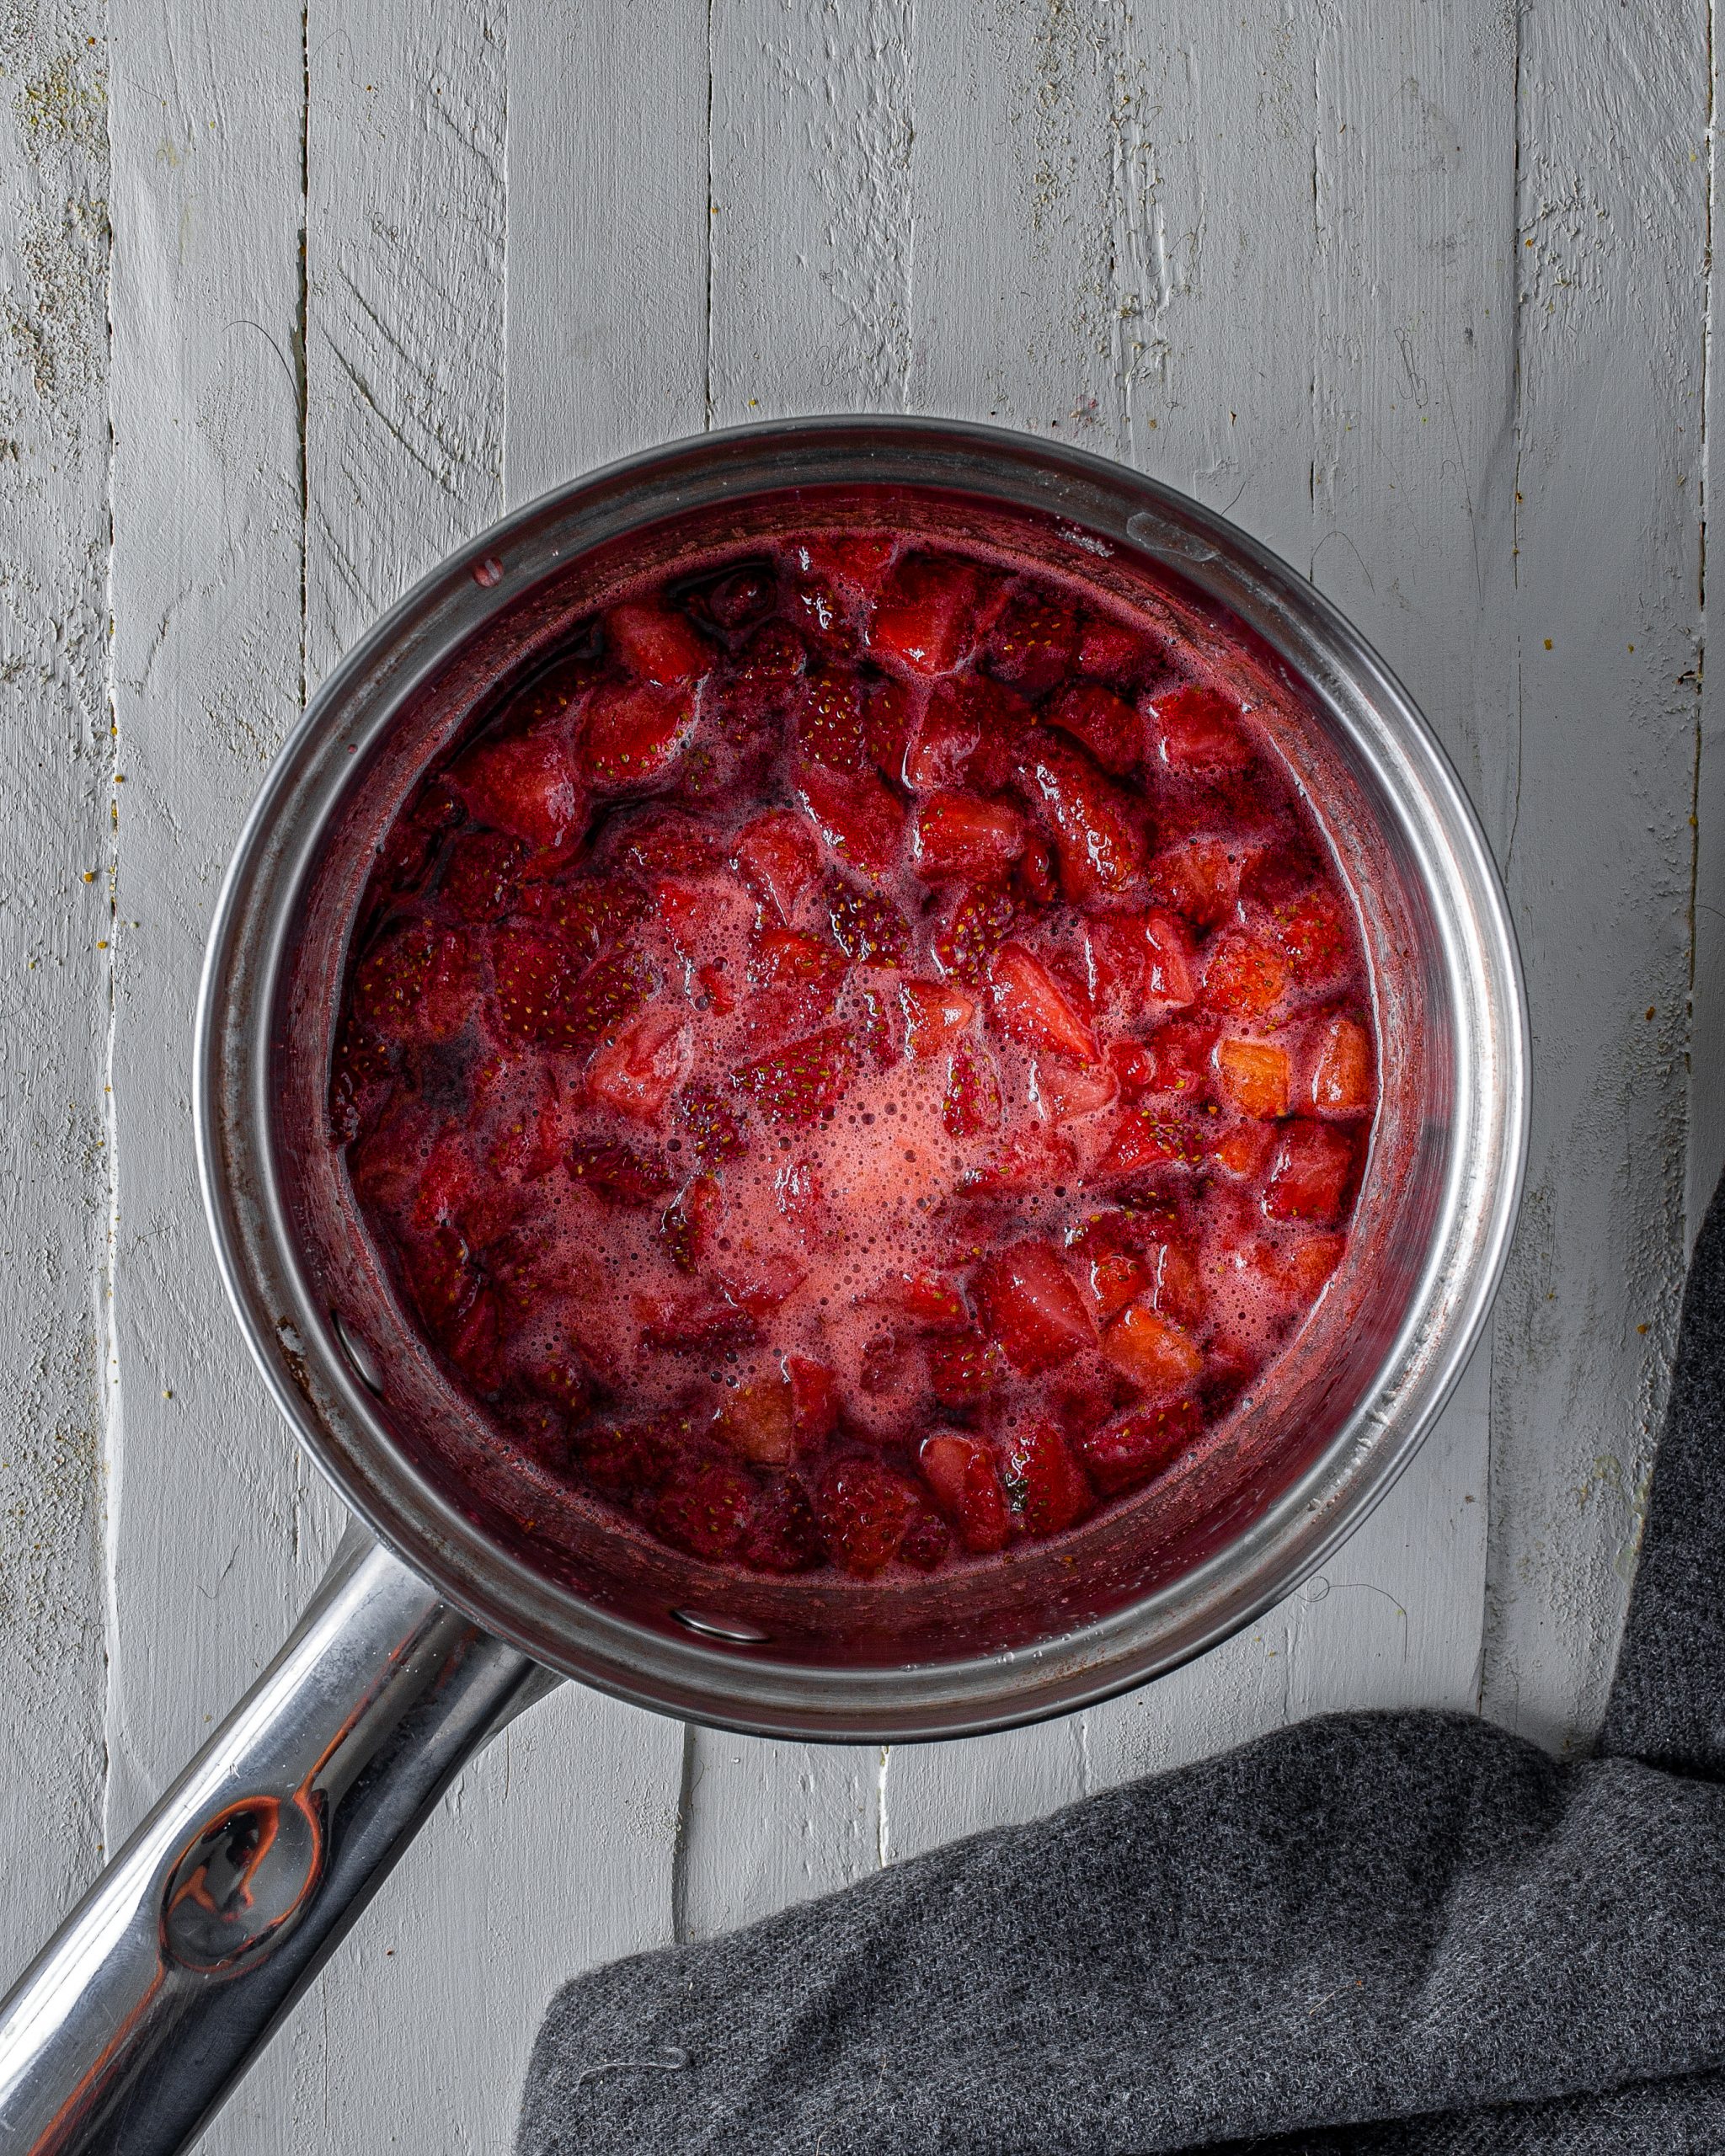 To a saucepan over medium heat, add the cornstarch mixture, granulated sugar, and cherries.